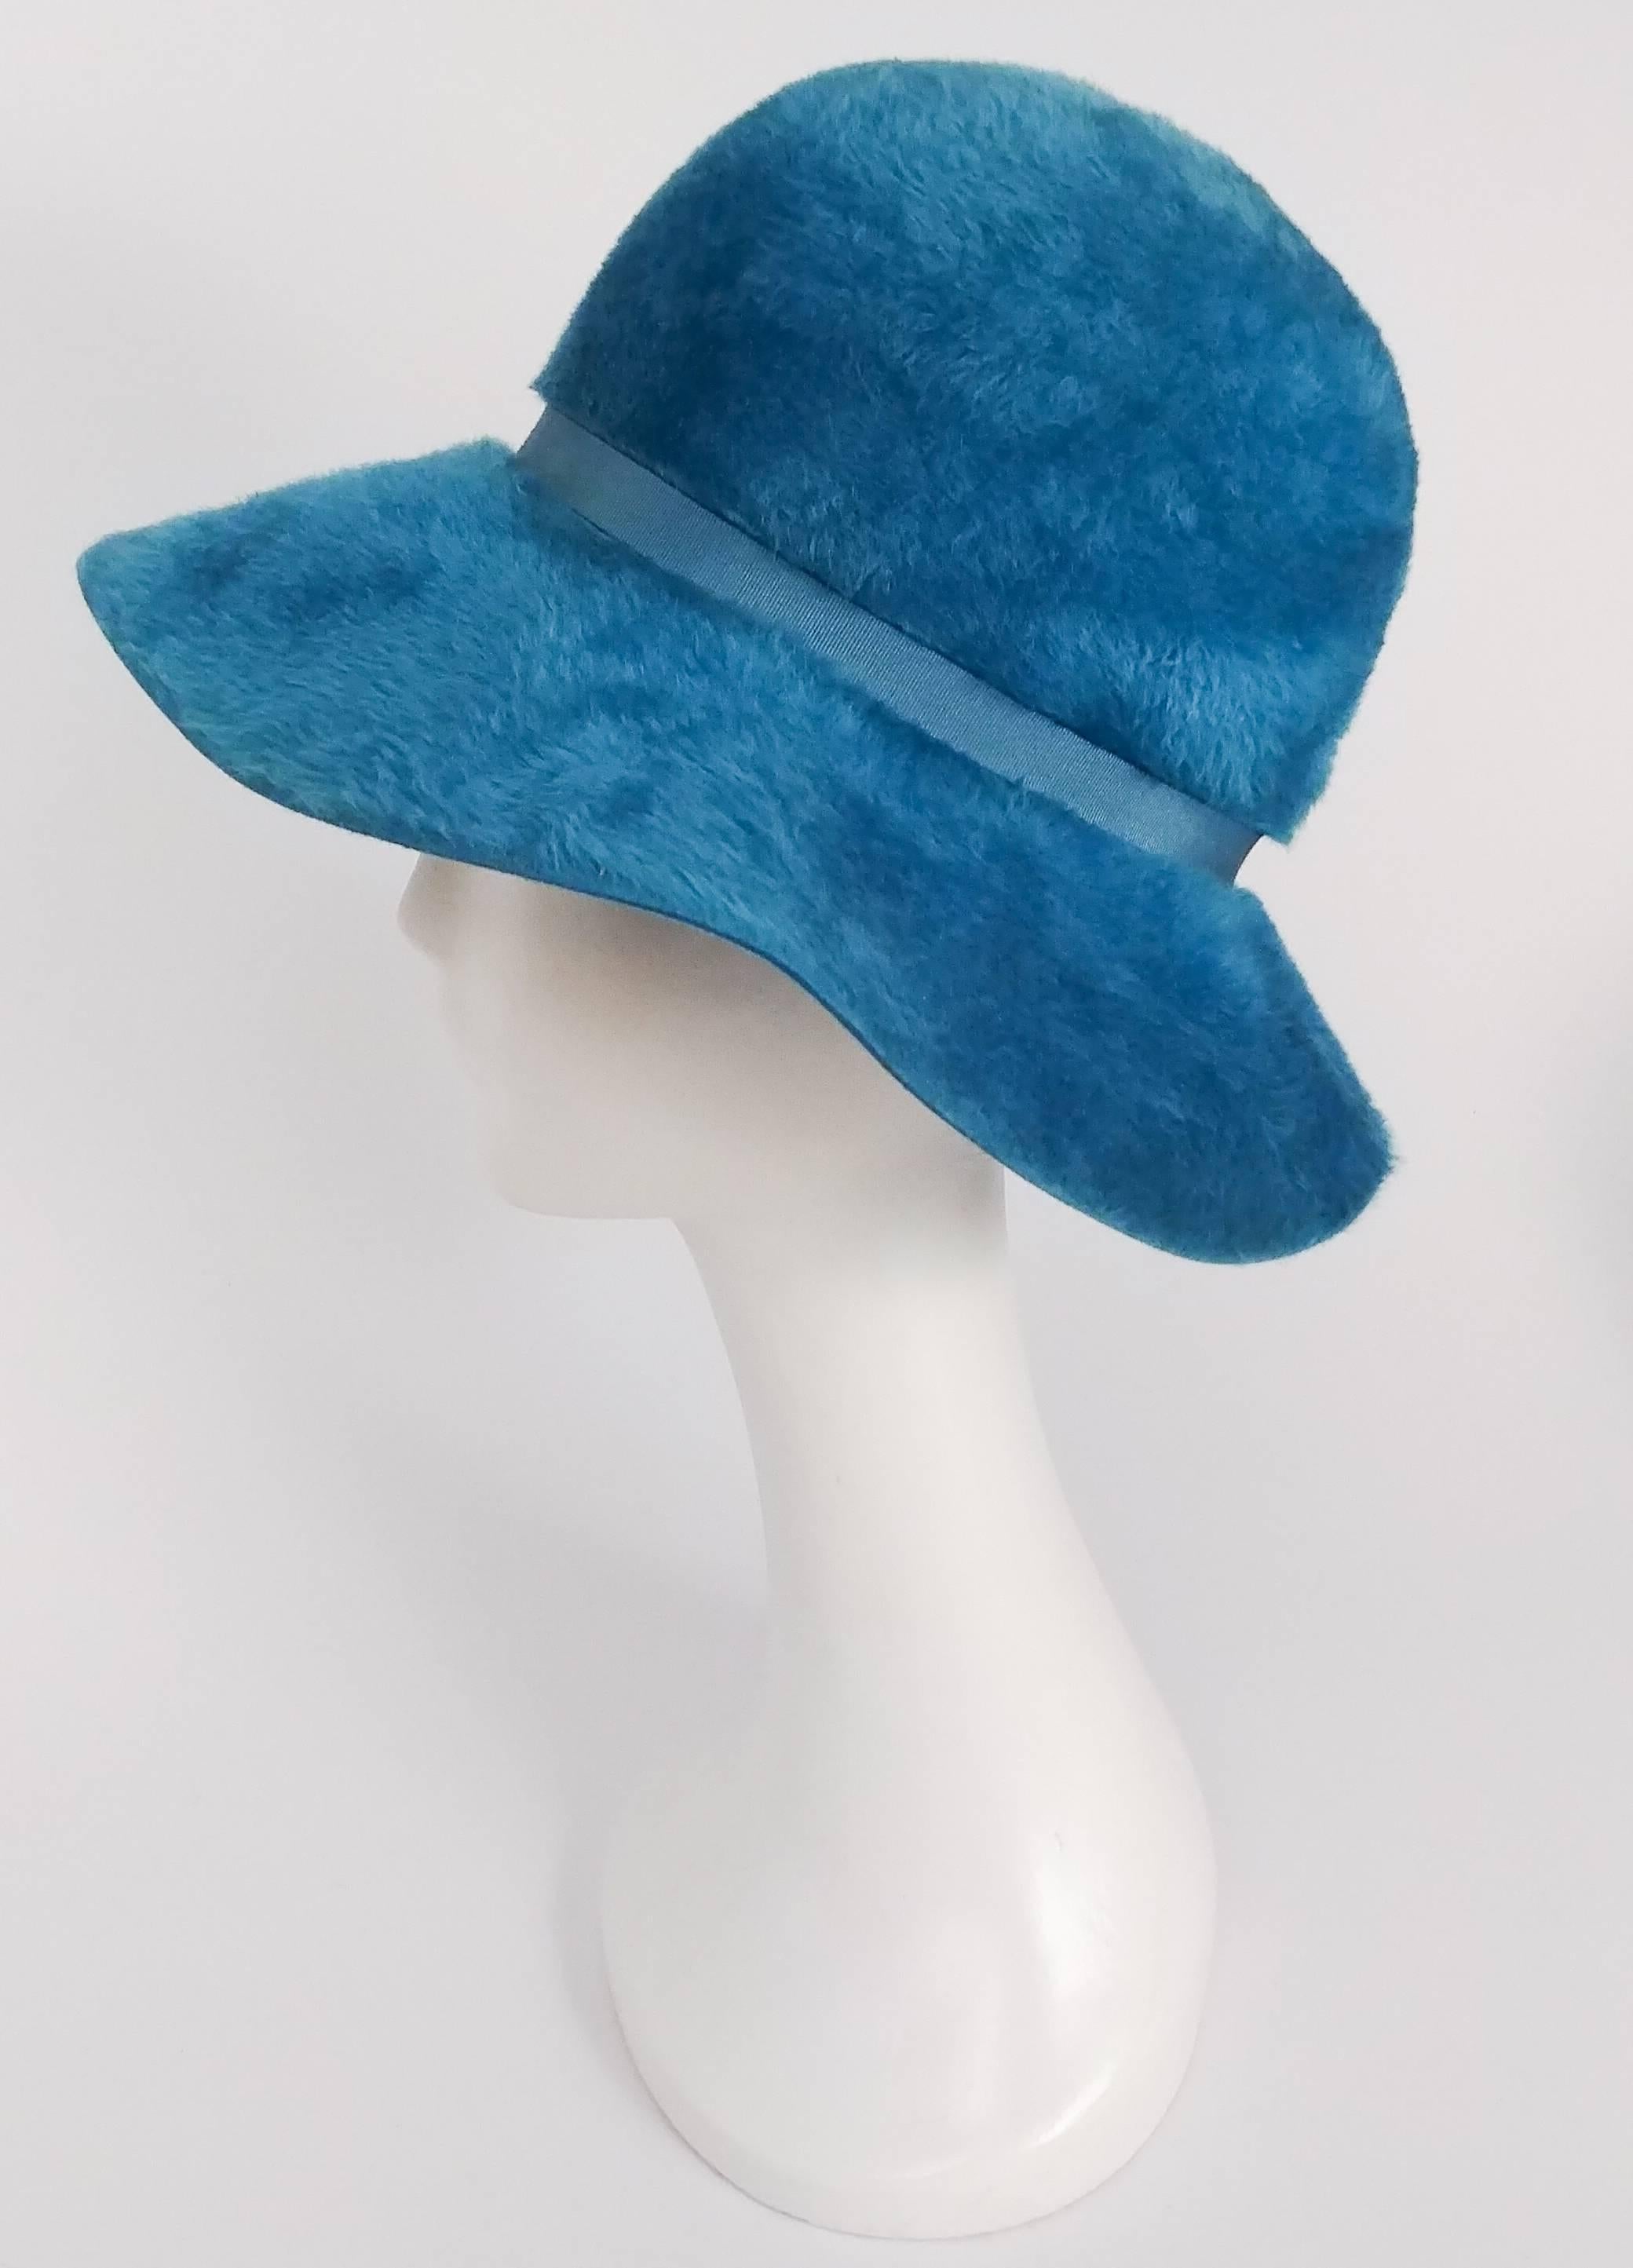 bright blue hat